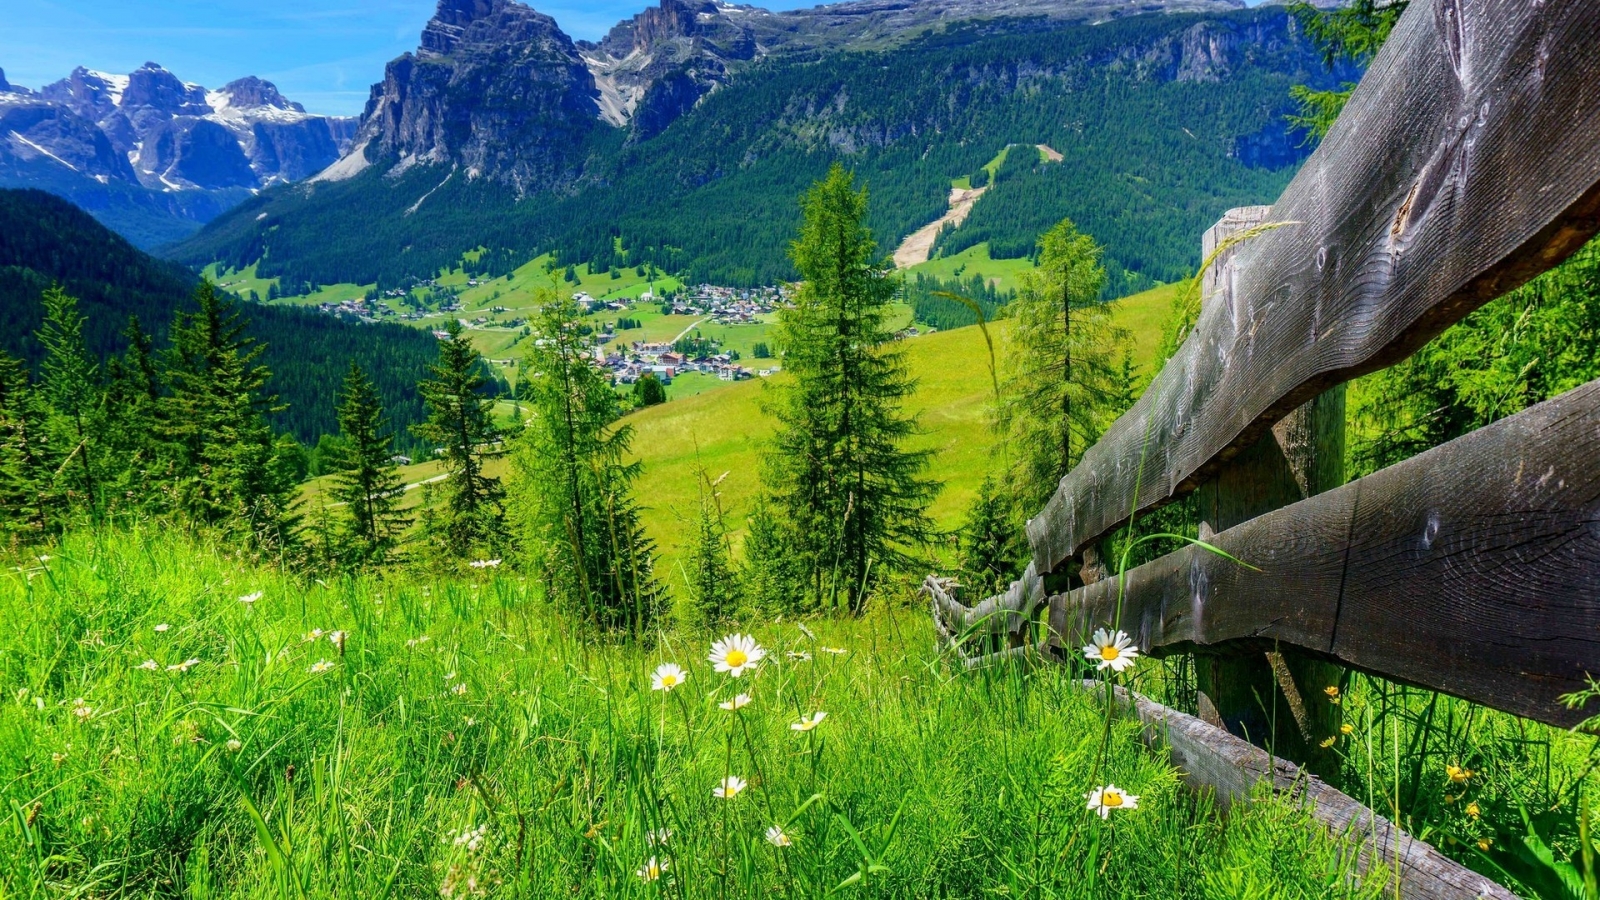 Spring Mountain Landscape for 1600 x 900 HDTV resolution